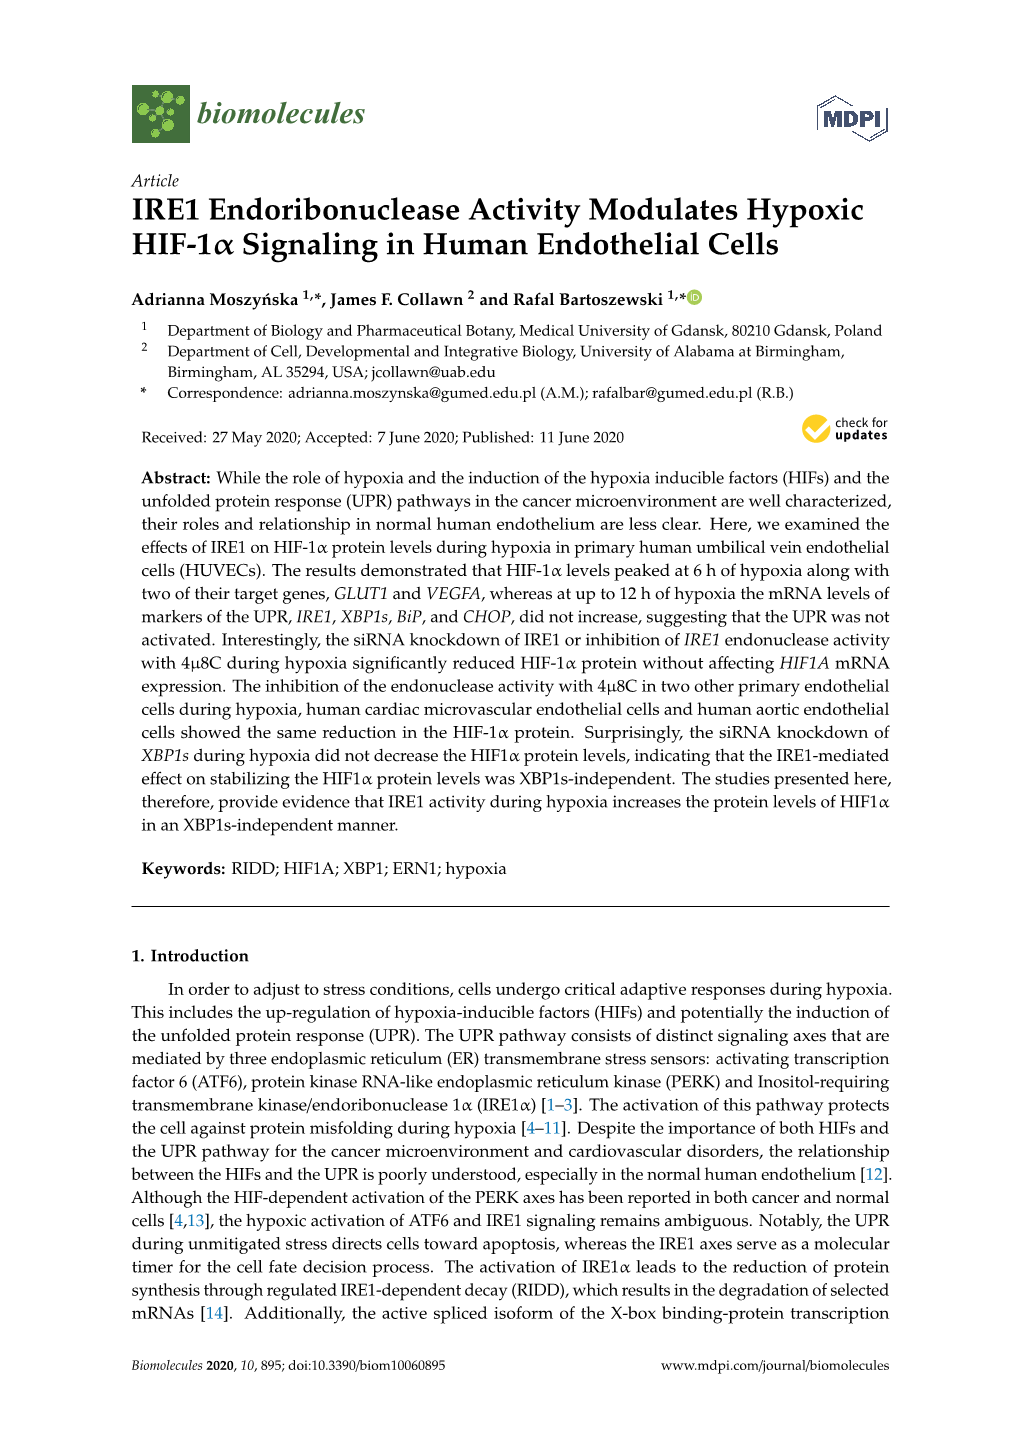 IRE1 Endoribonuclease Activity Modulates Hypoxic HIF-1Α Signaling in Human Endothelial Cells